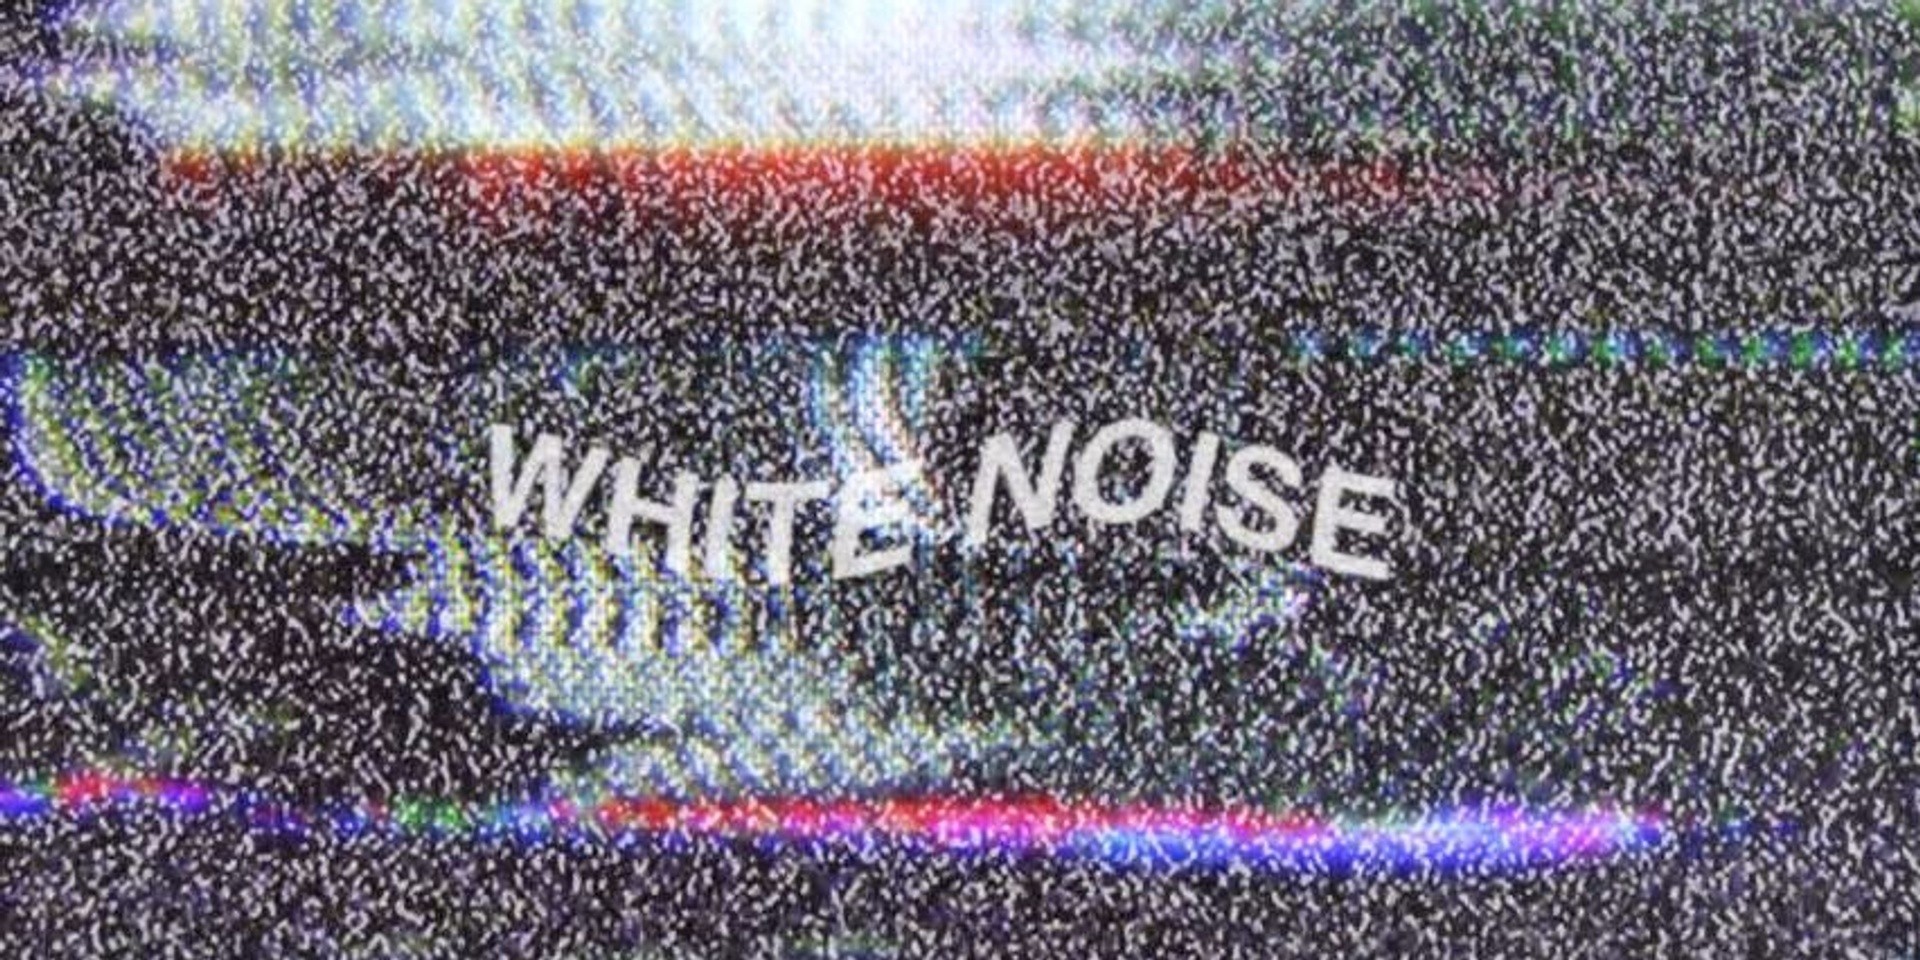 LISTEN: Gentle Bones quietly drops his stirring new single 'White Noise'